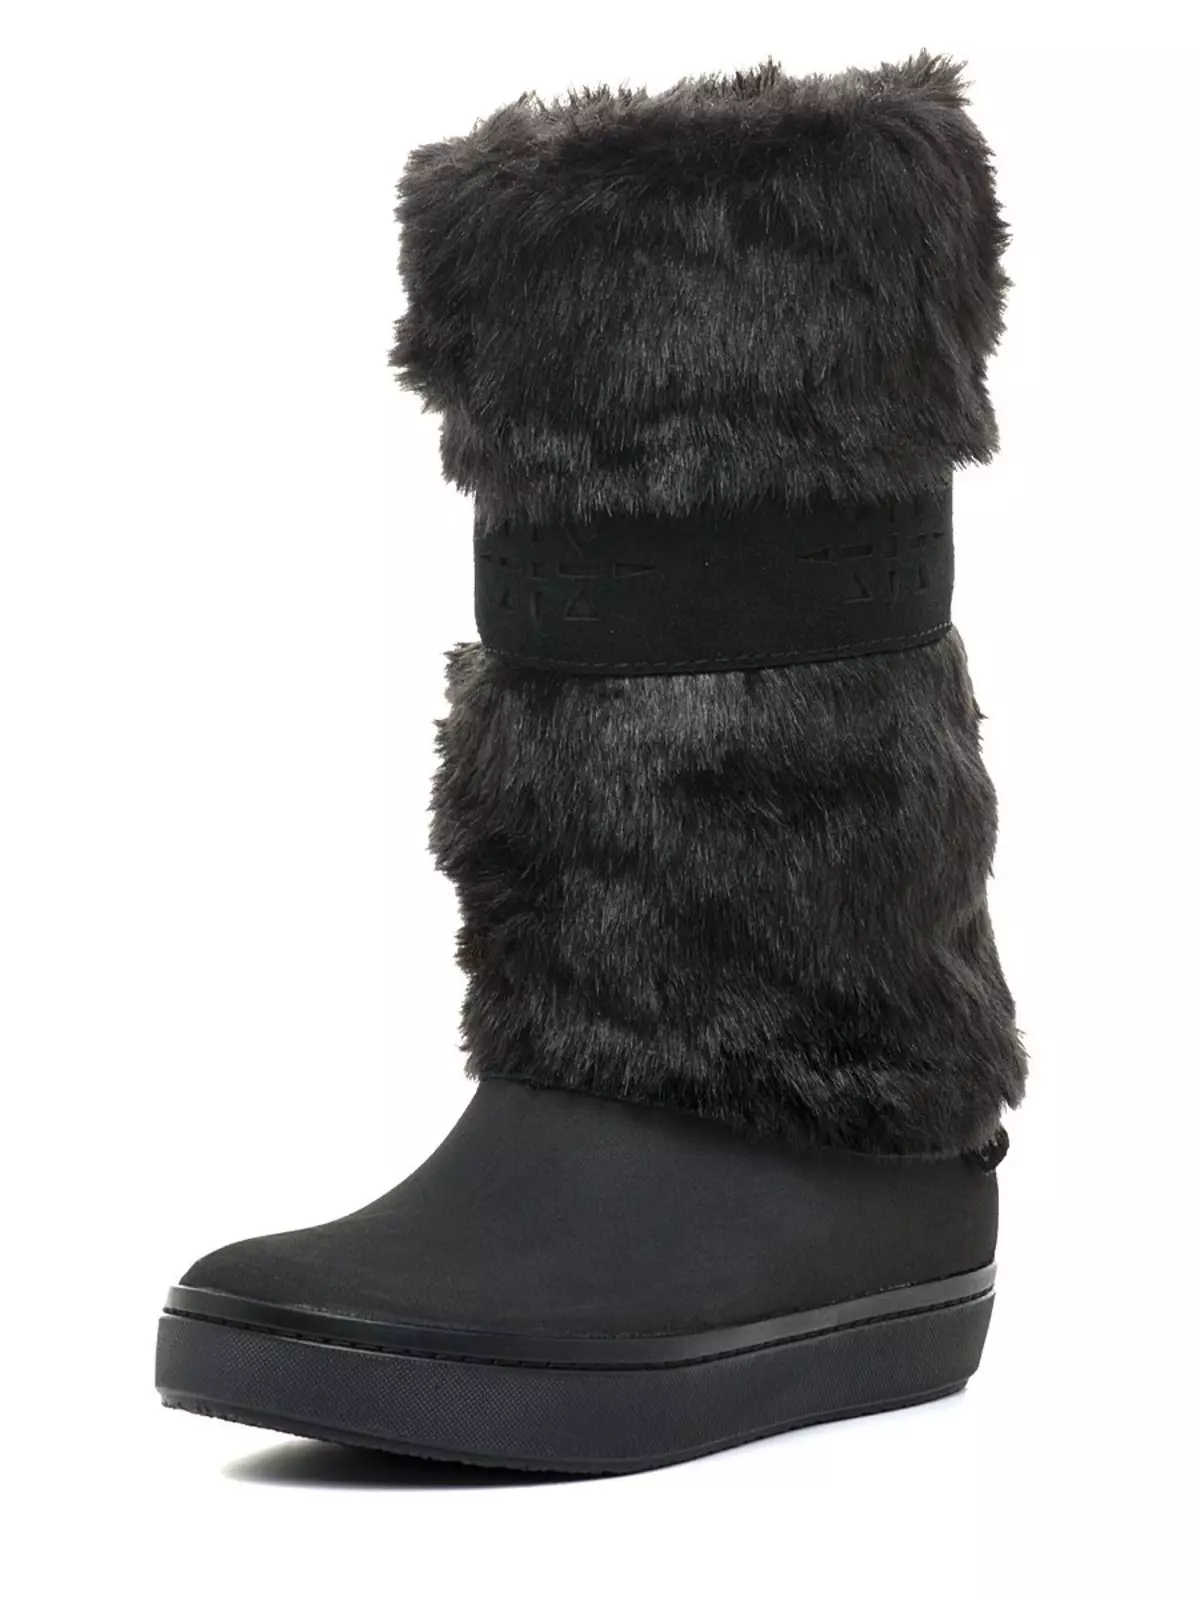 CROCS Winter Boots (32 Foto): Model Panas Bayi untuk Winter, Ulasan Pemilik 2094_19